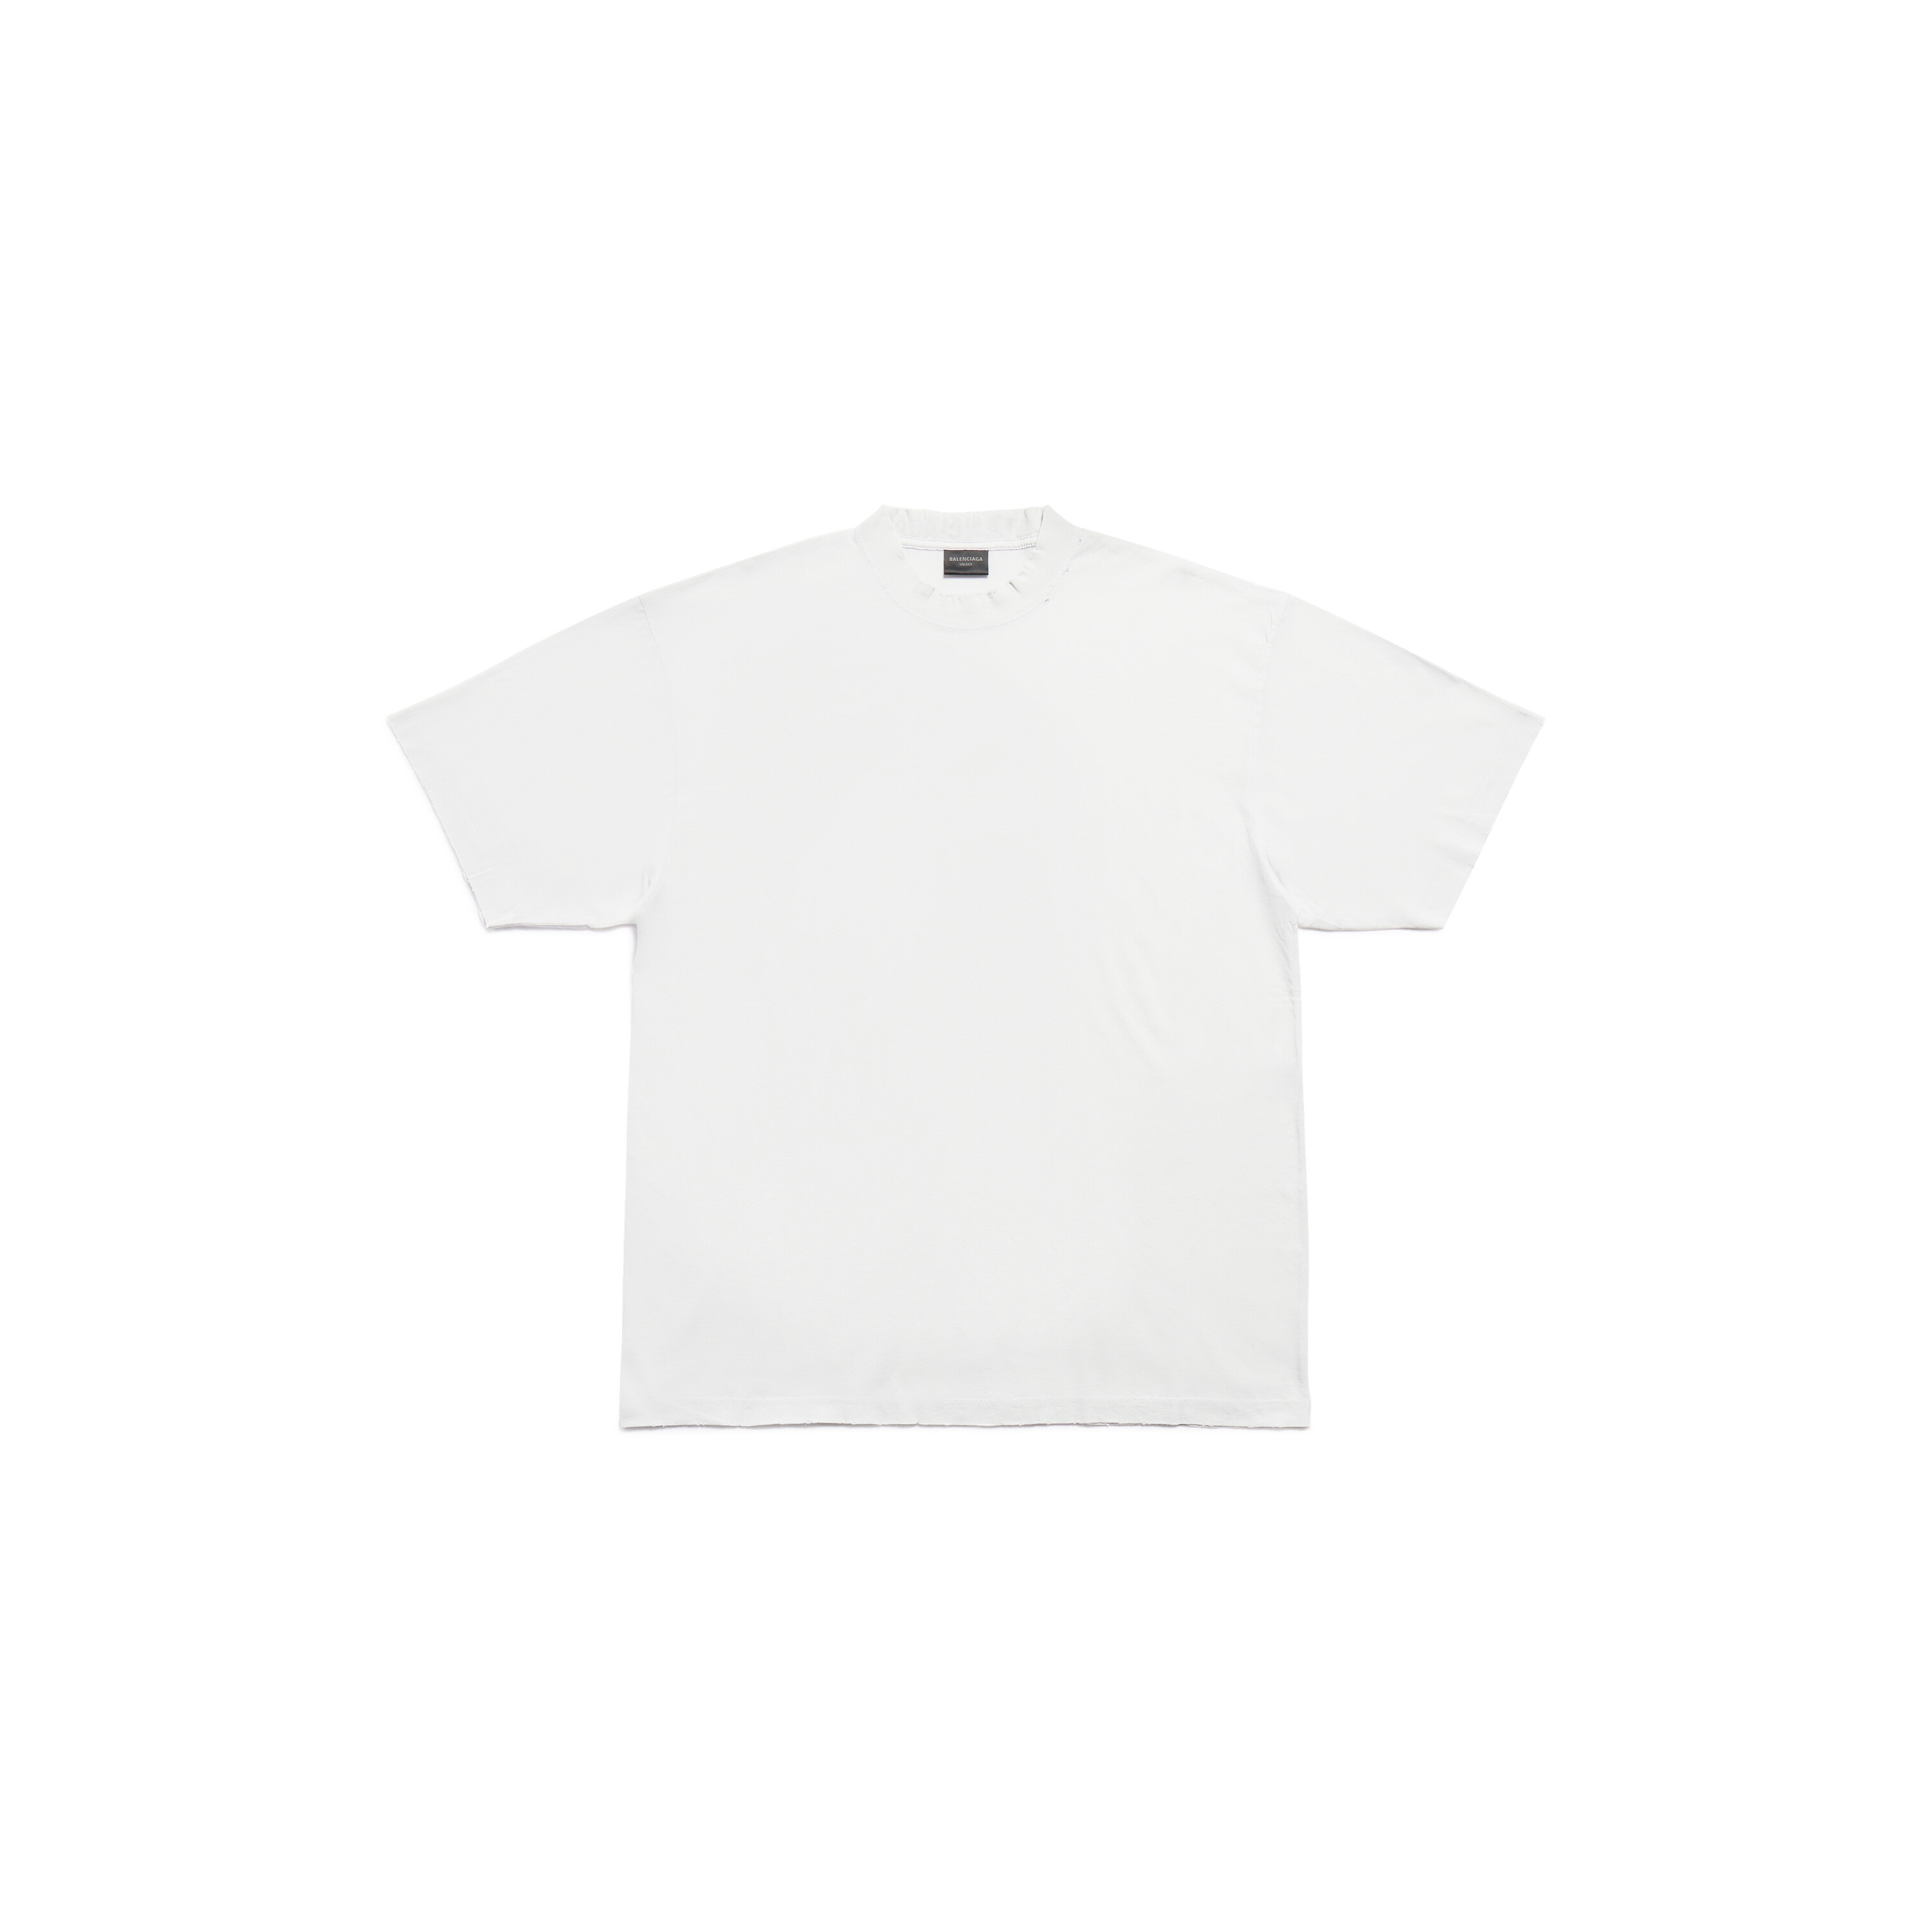 Balenciaga Tshirt Medium Fit in White  Balenciaga GB